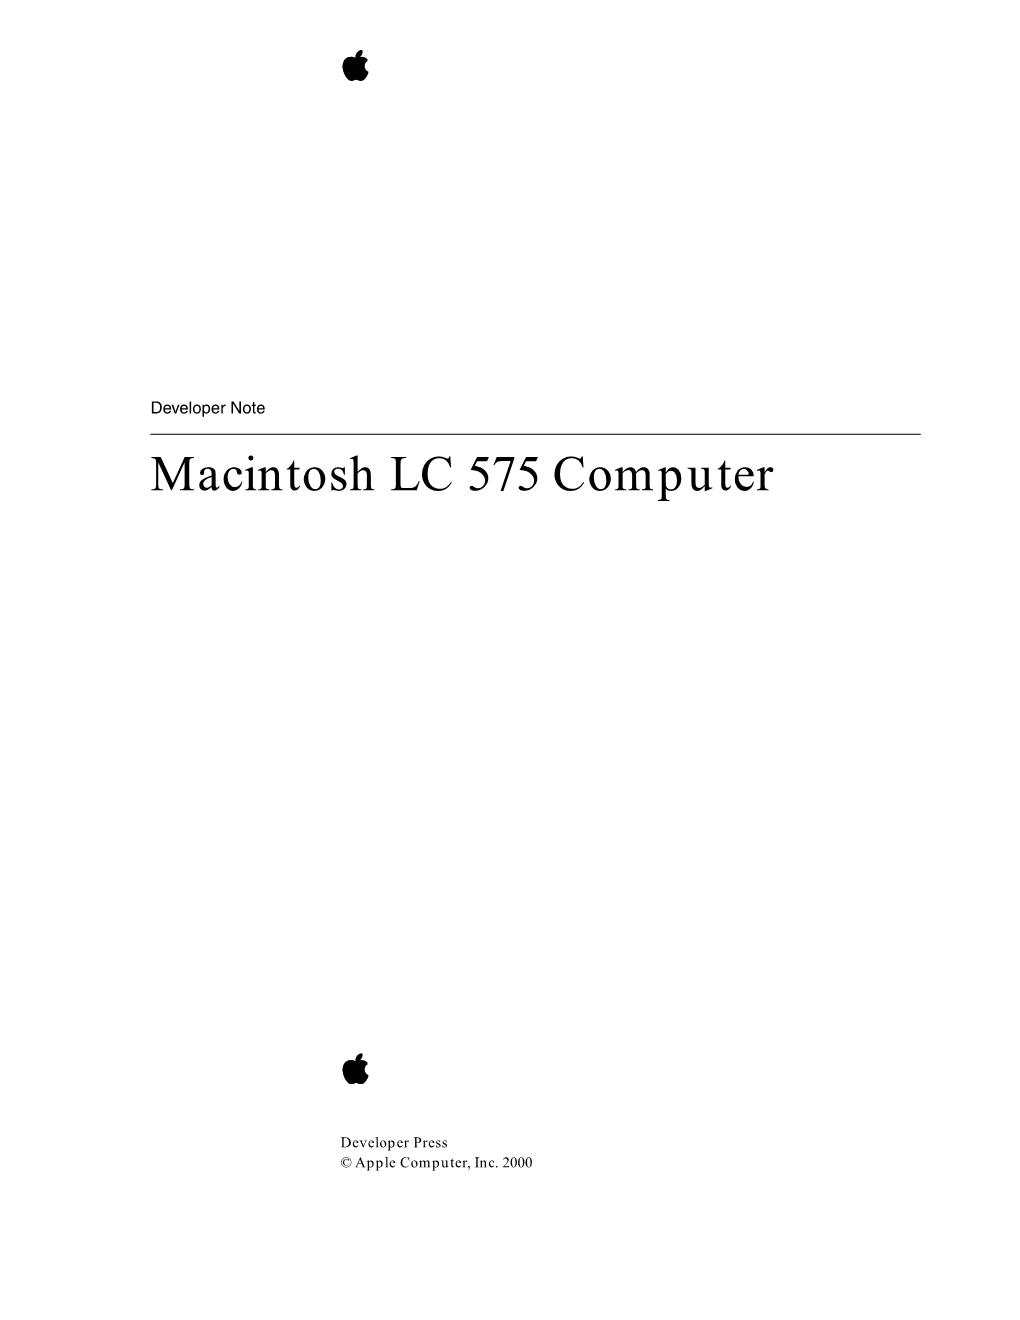 Macintosh LC 575 Computer